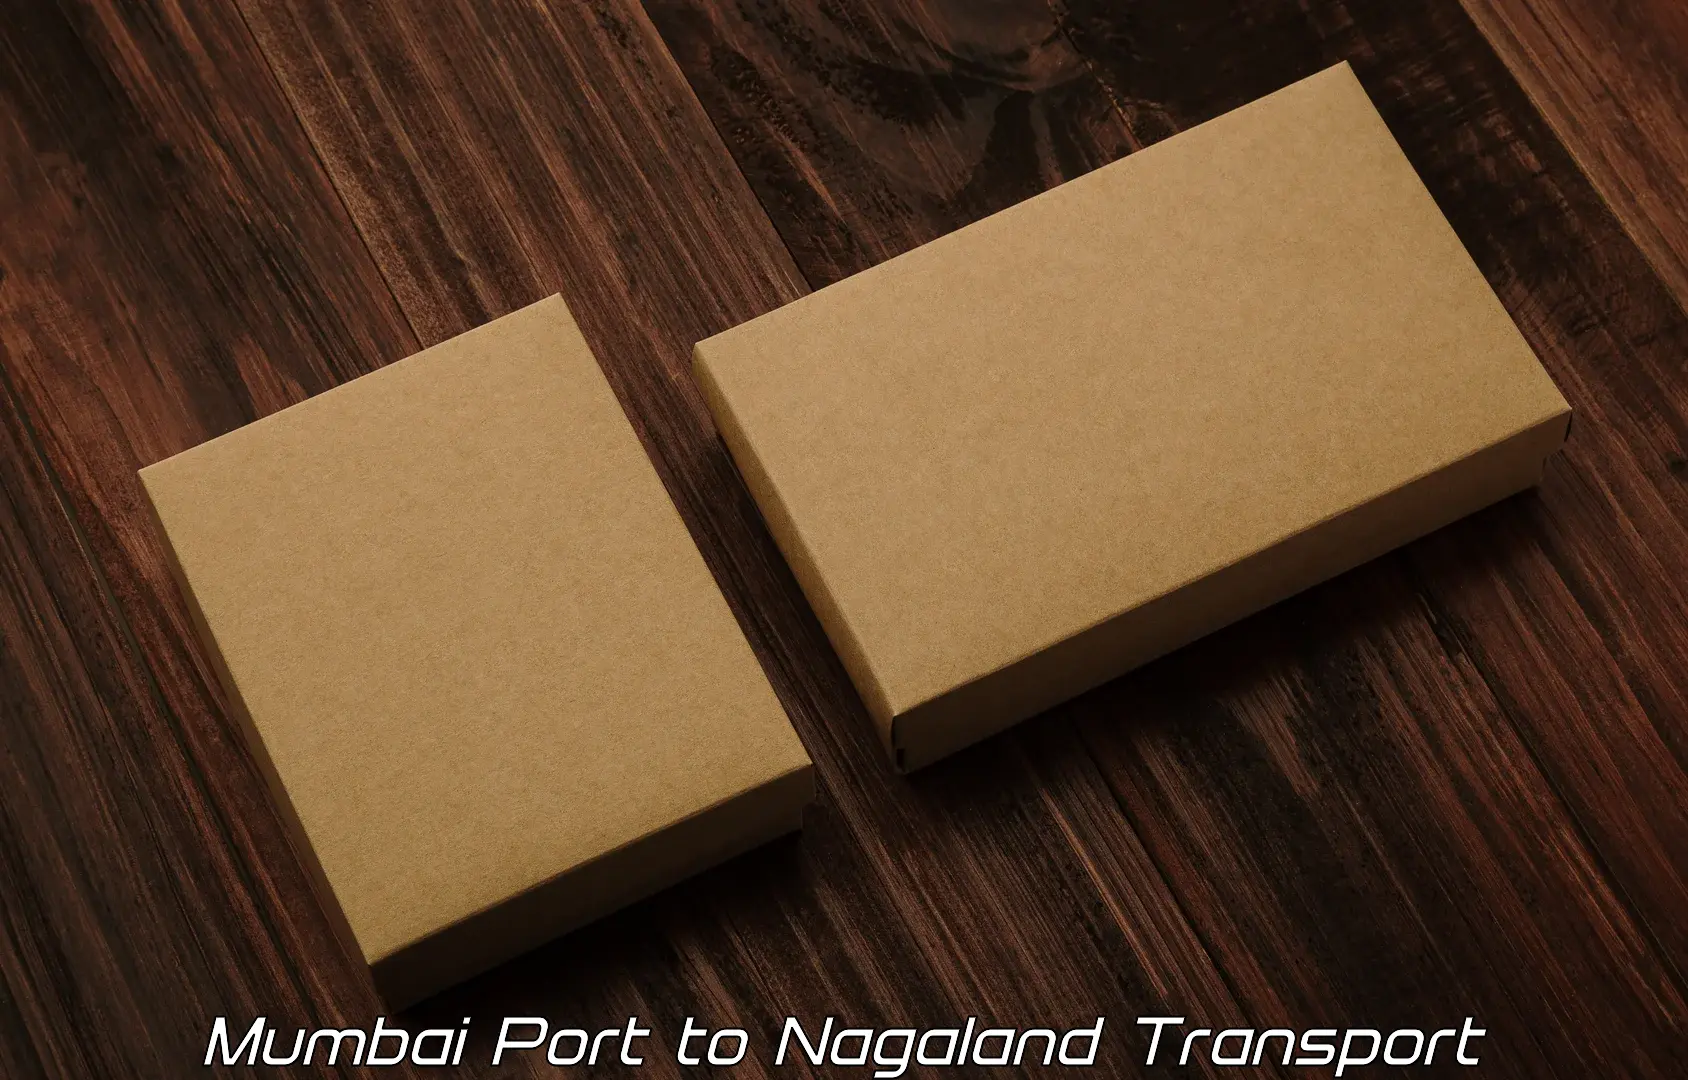 Bike shipping service Mumbai Port to Nagaland